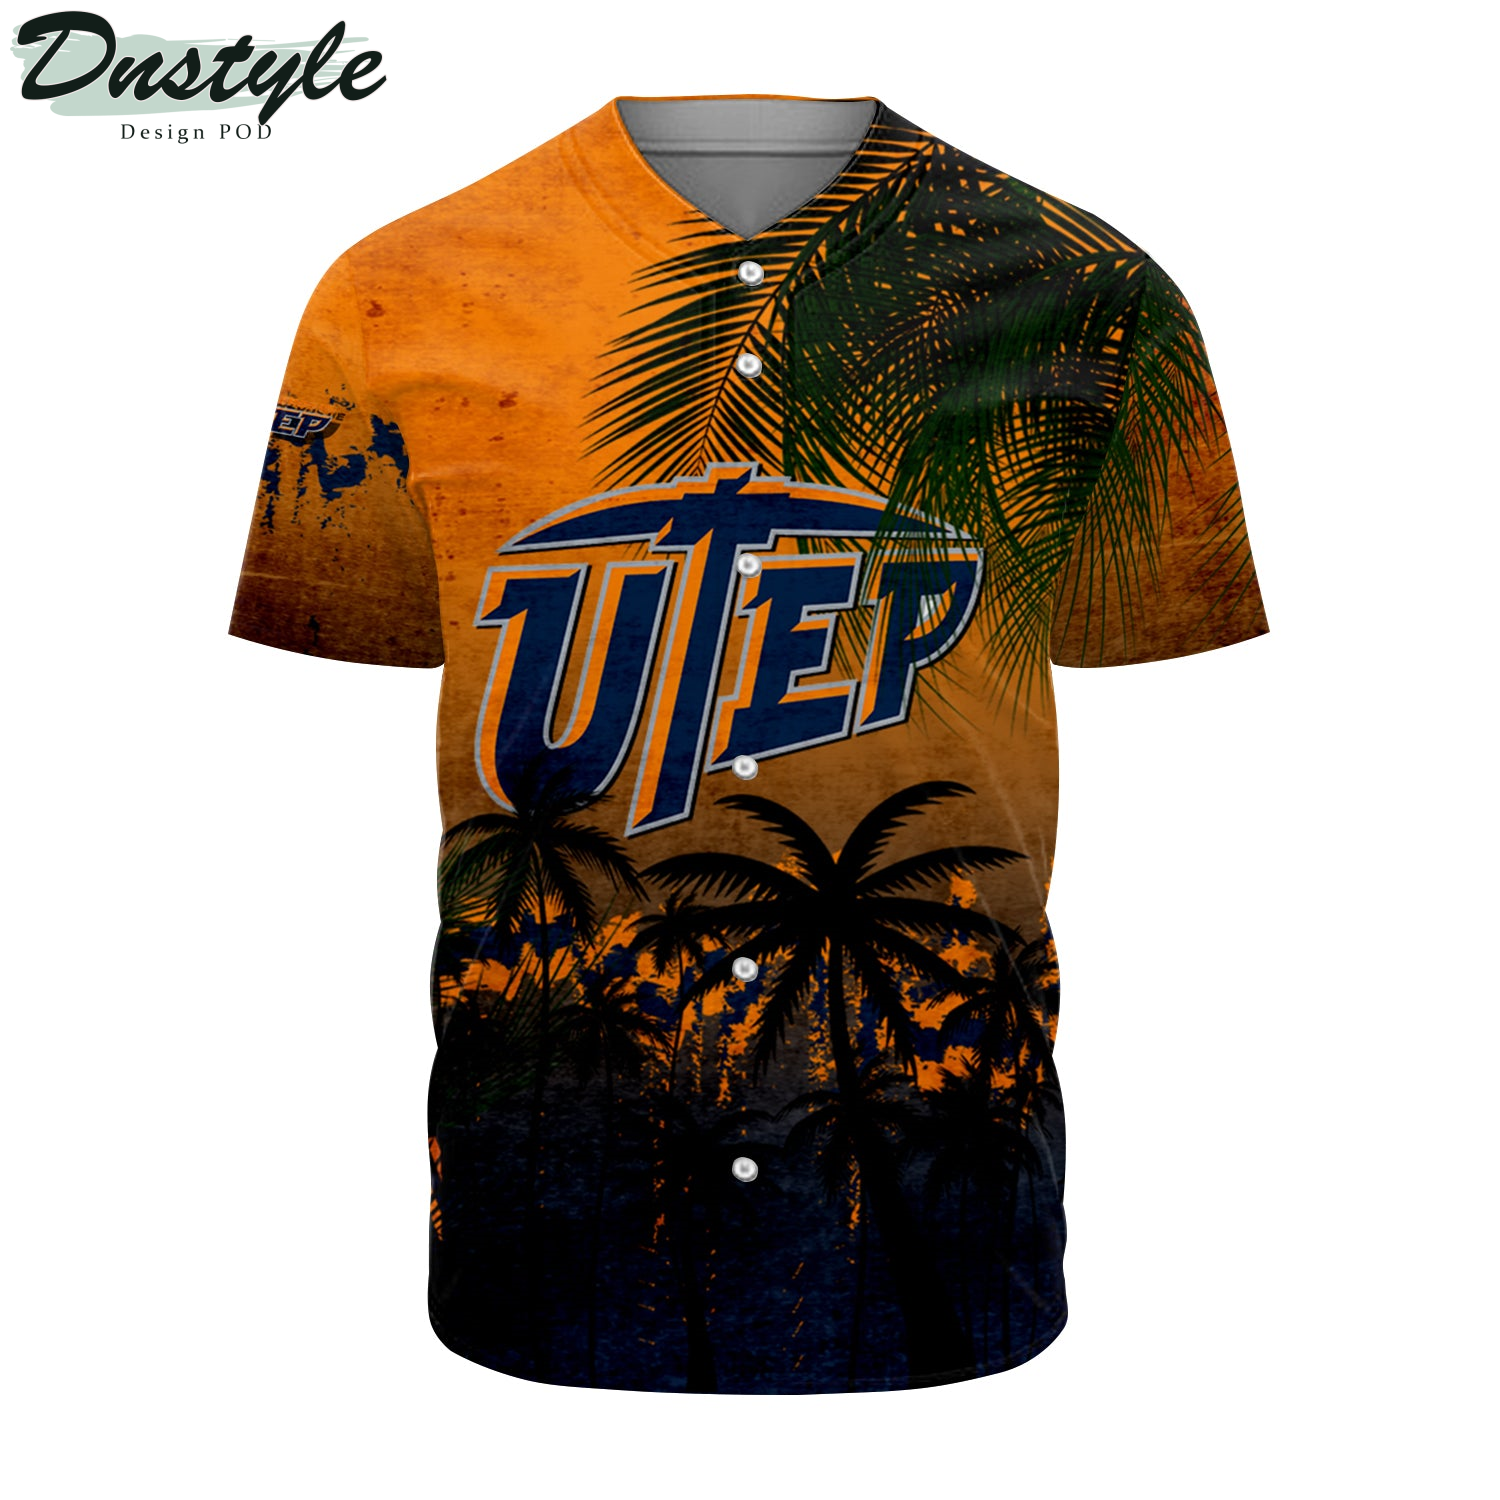 UTEP Miners Baseball Jersey Coconut Tree Tropical Grunge